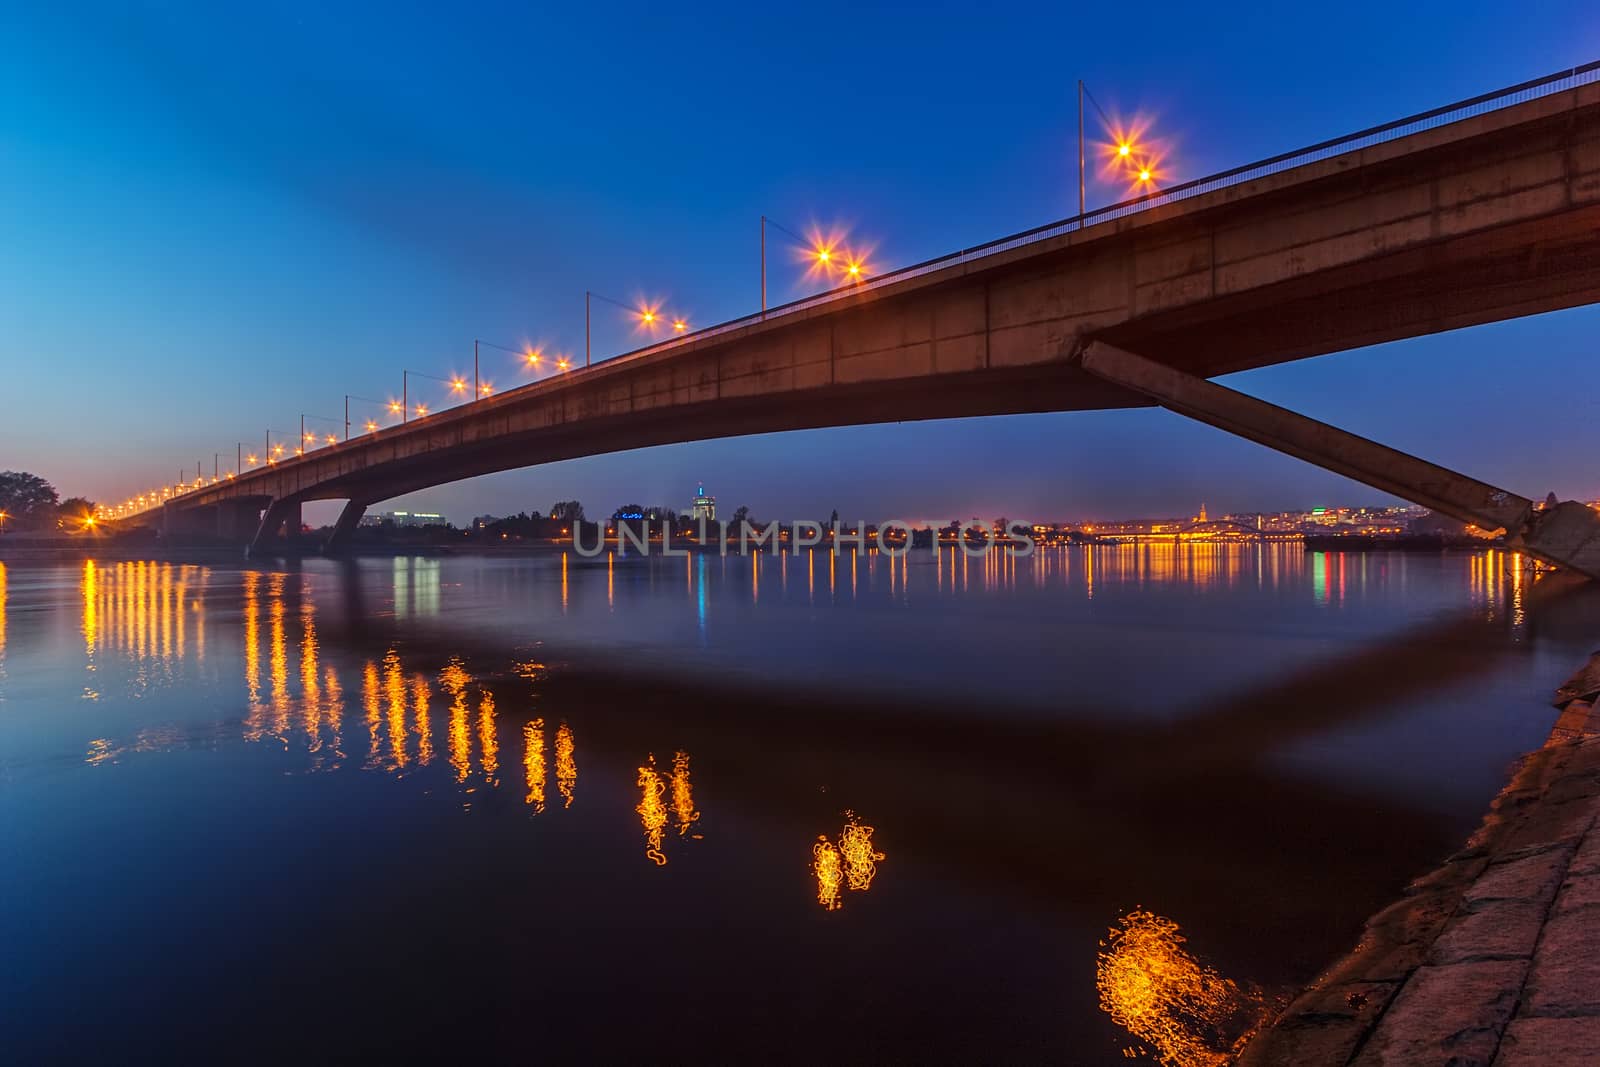 Bridge across river at night by vladimirnenezic